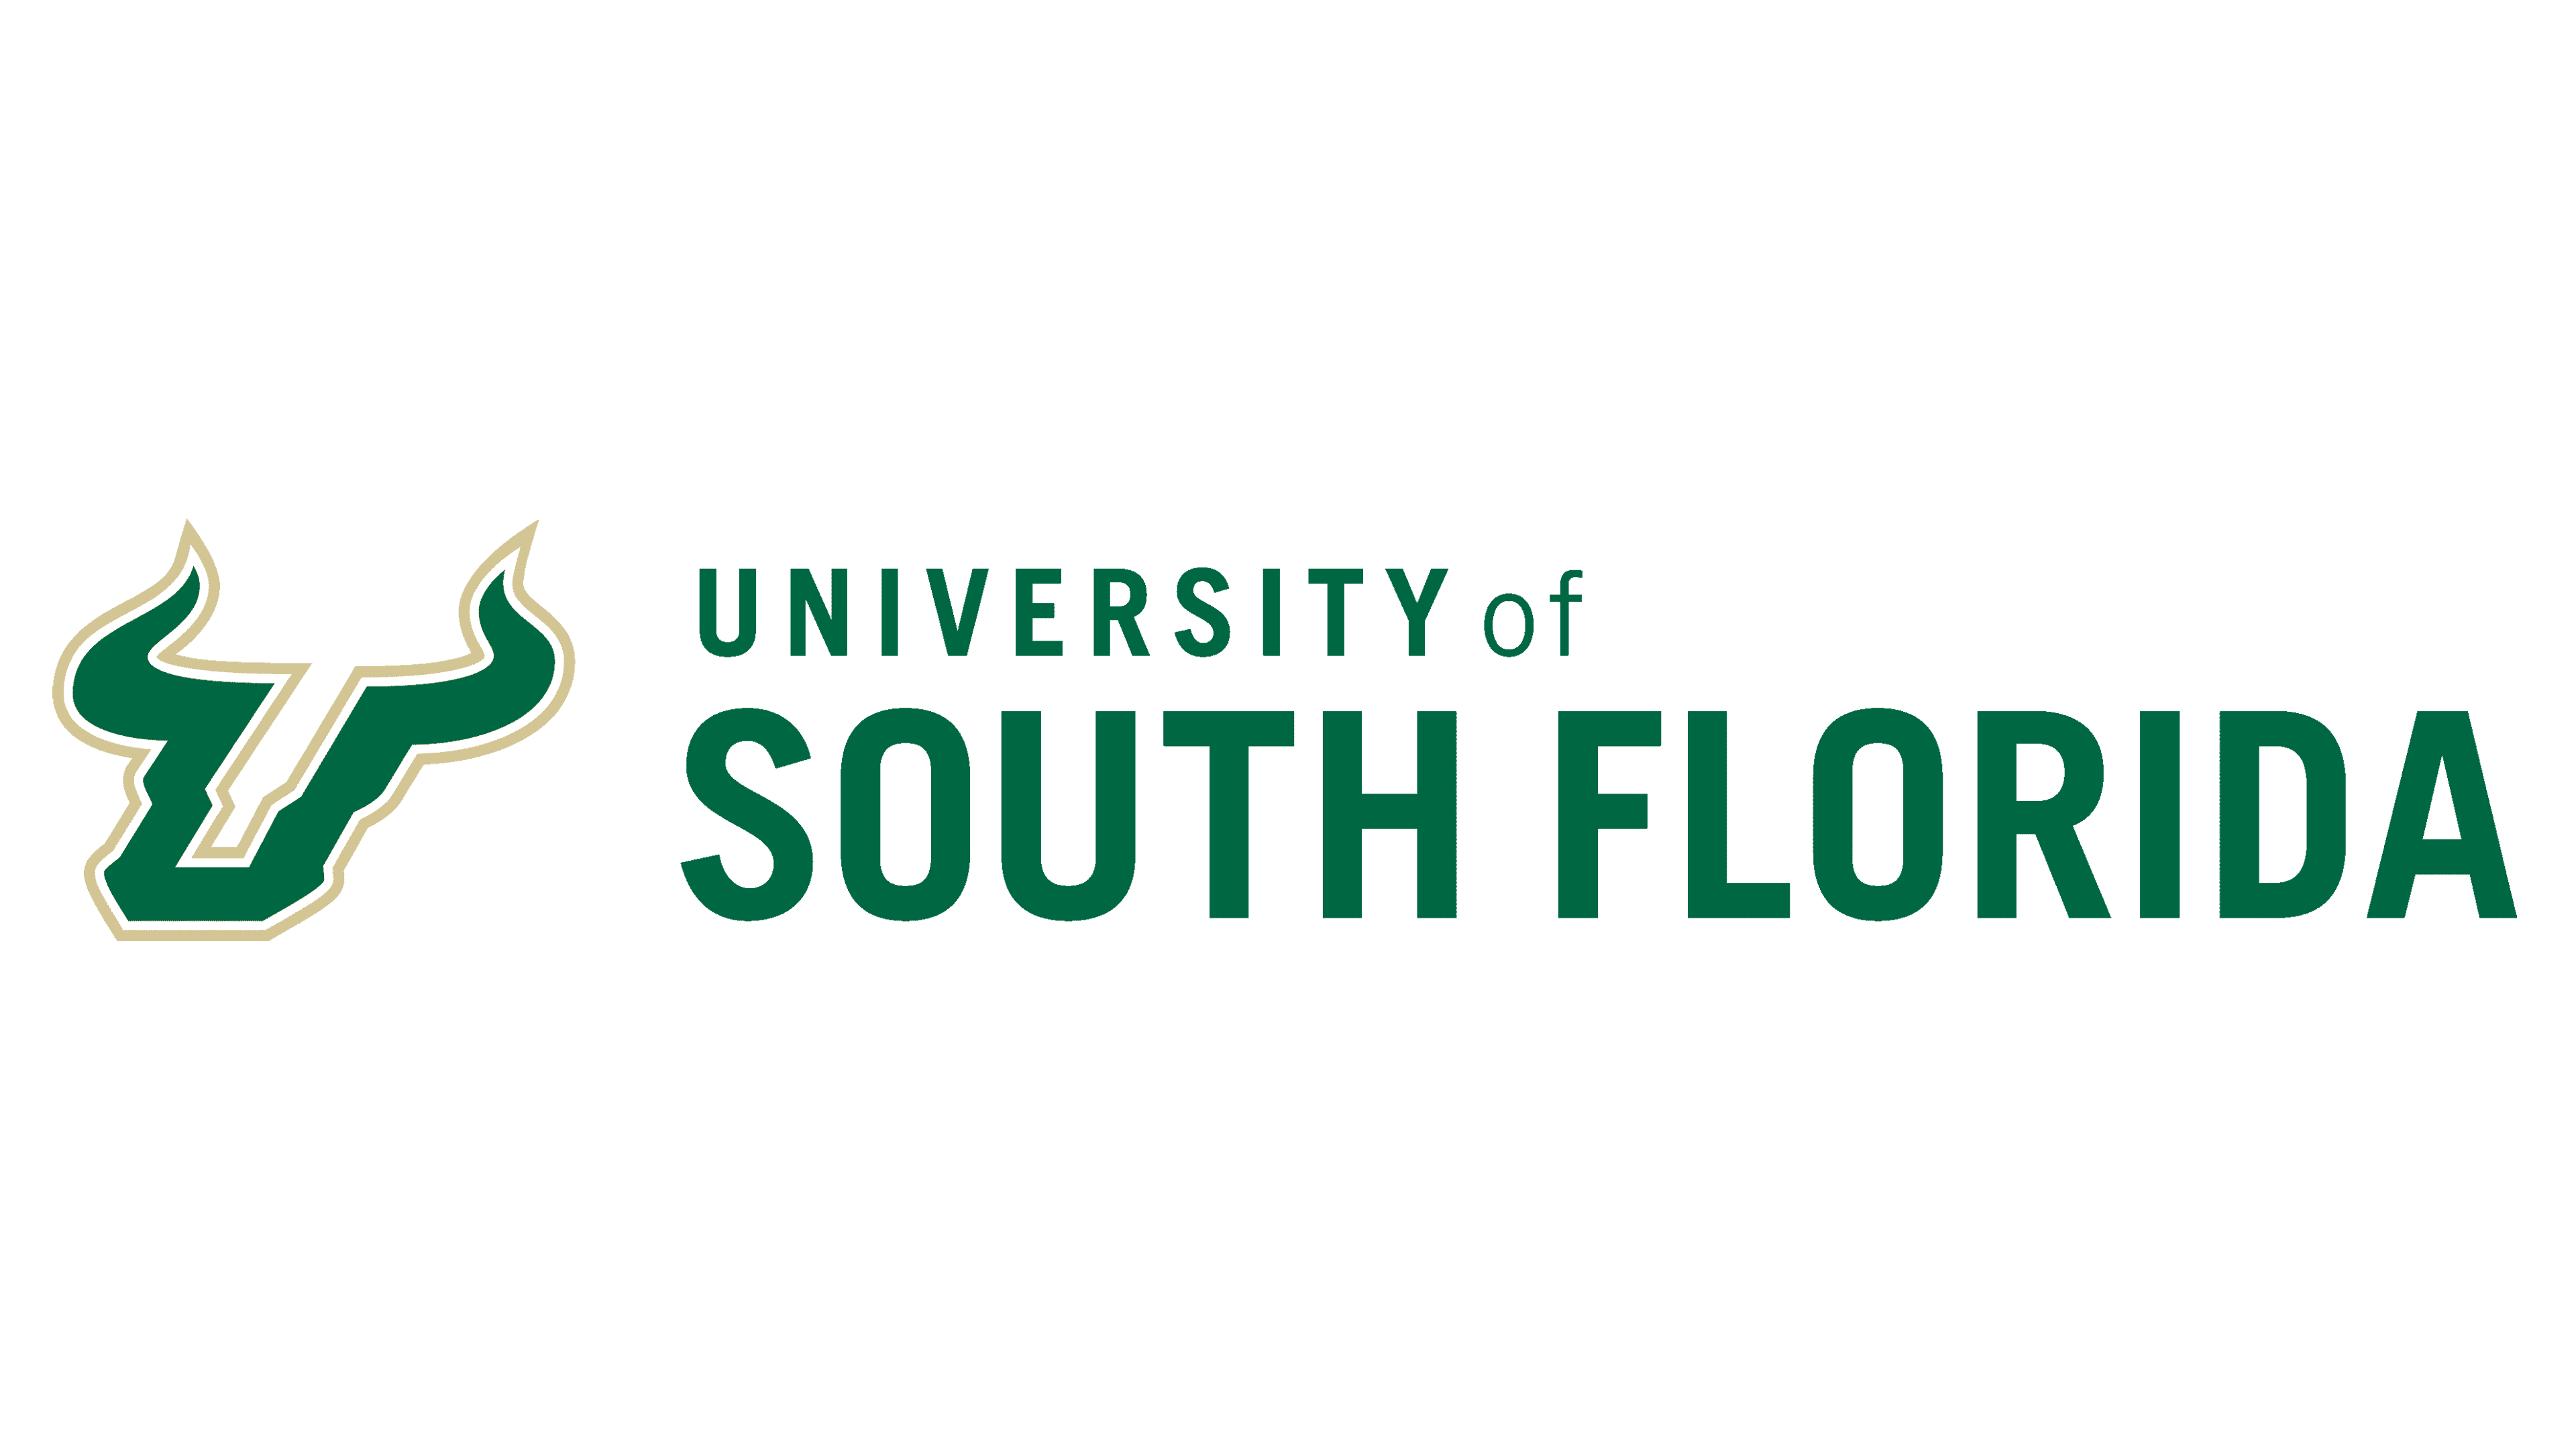 University of South Florida Transparent PNG Logo